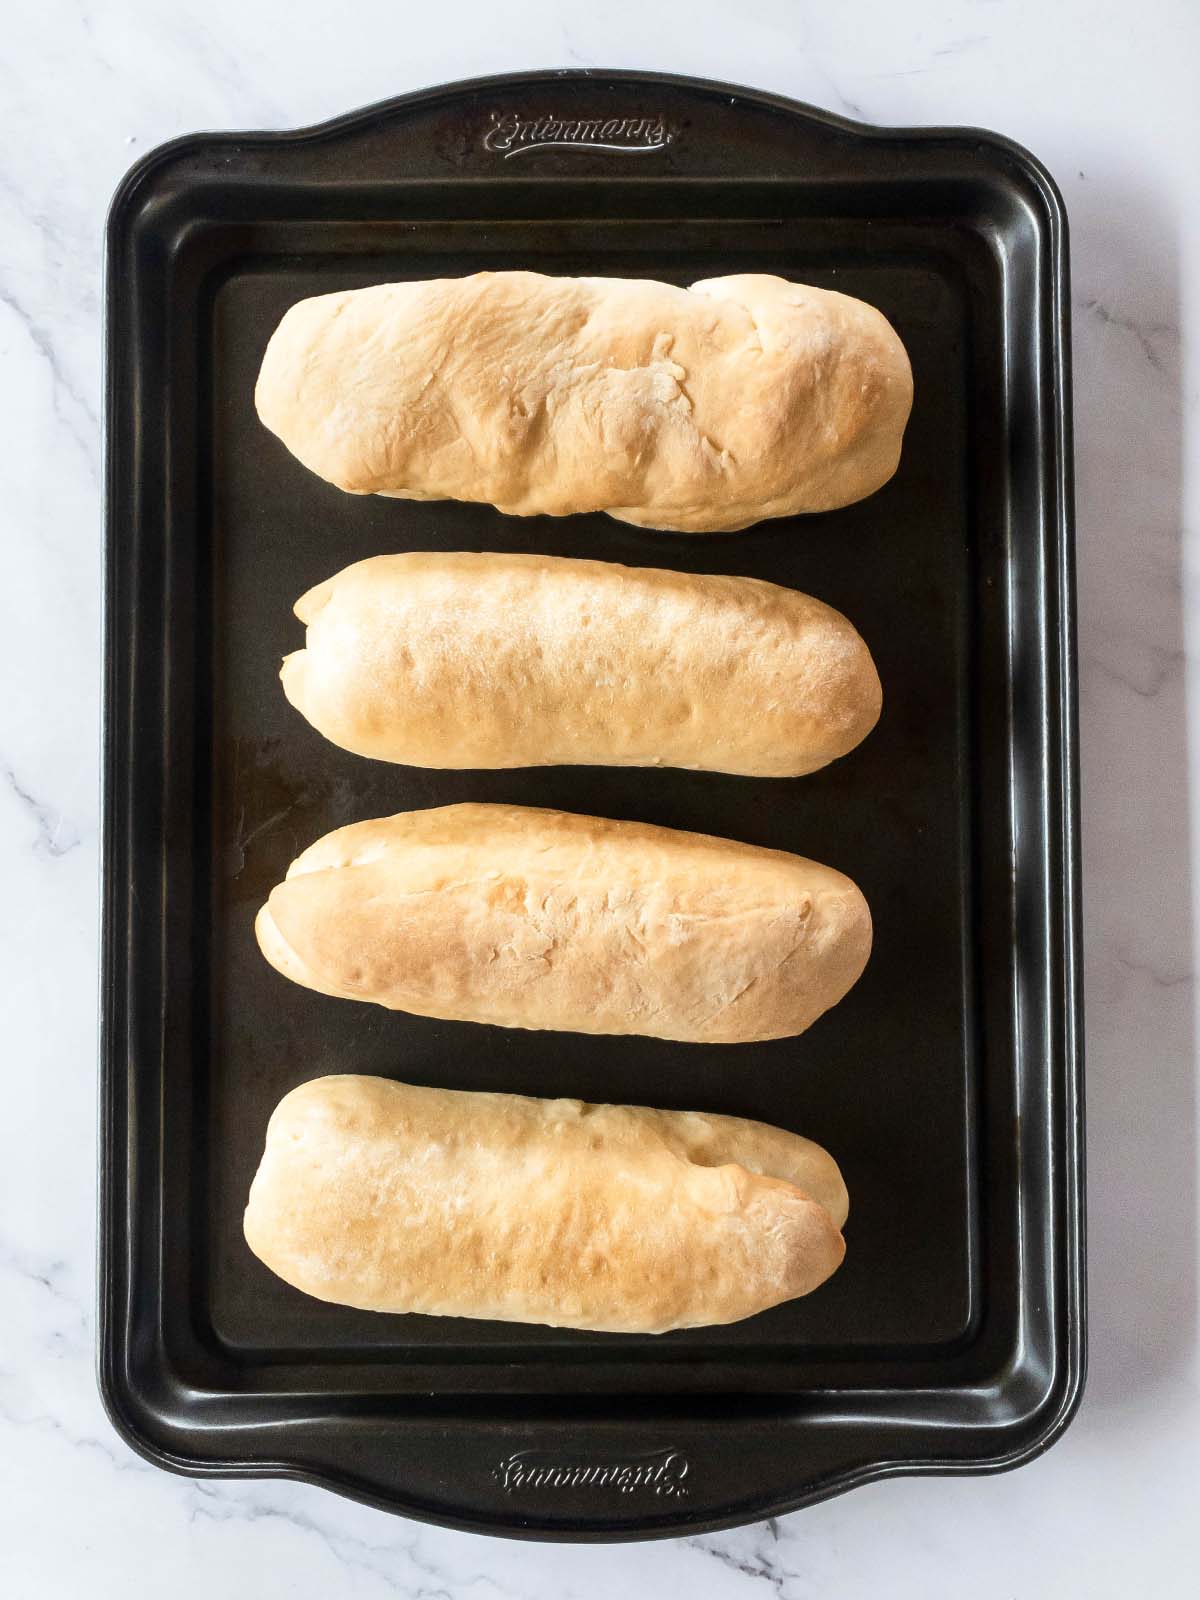 Four baked Jimmy Johns bread loafs on a baking sheet.